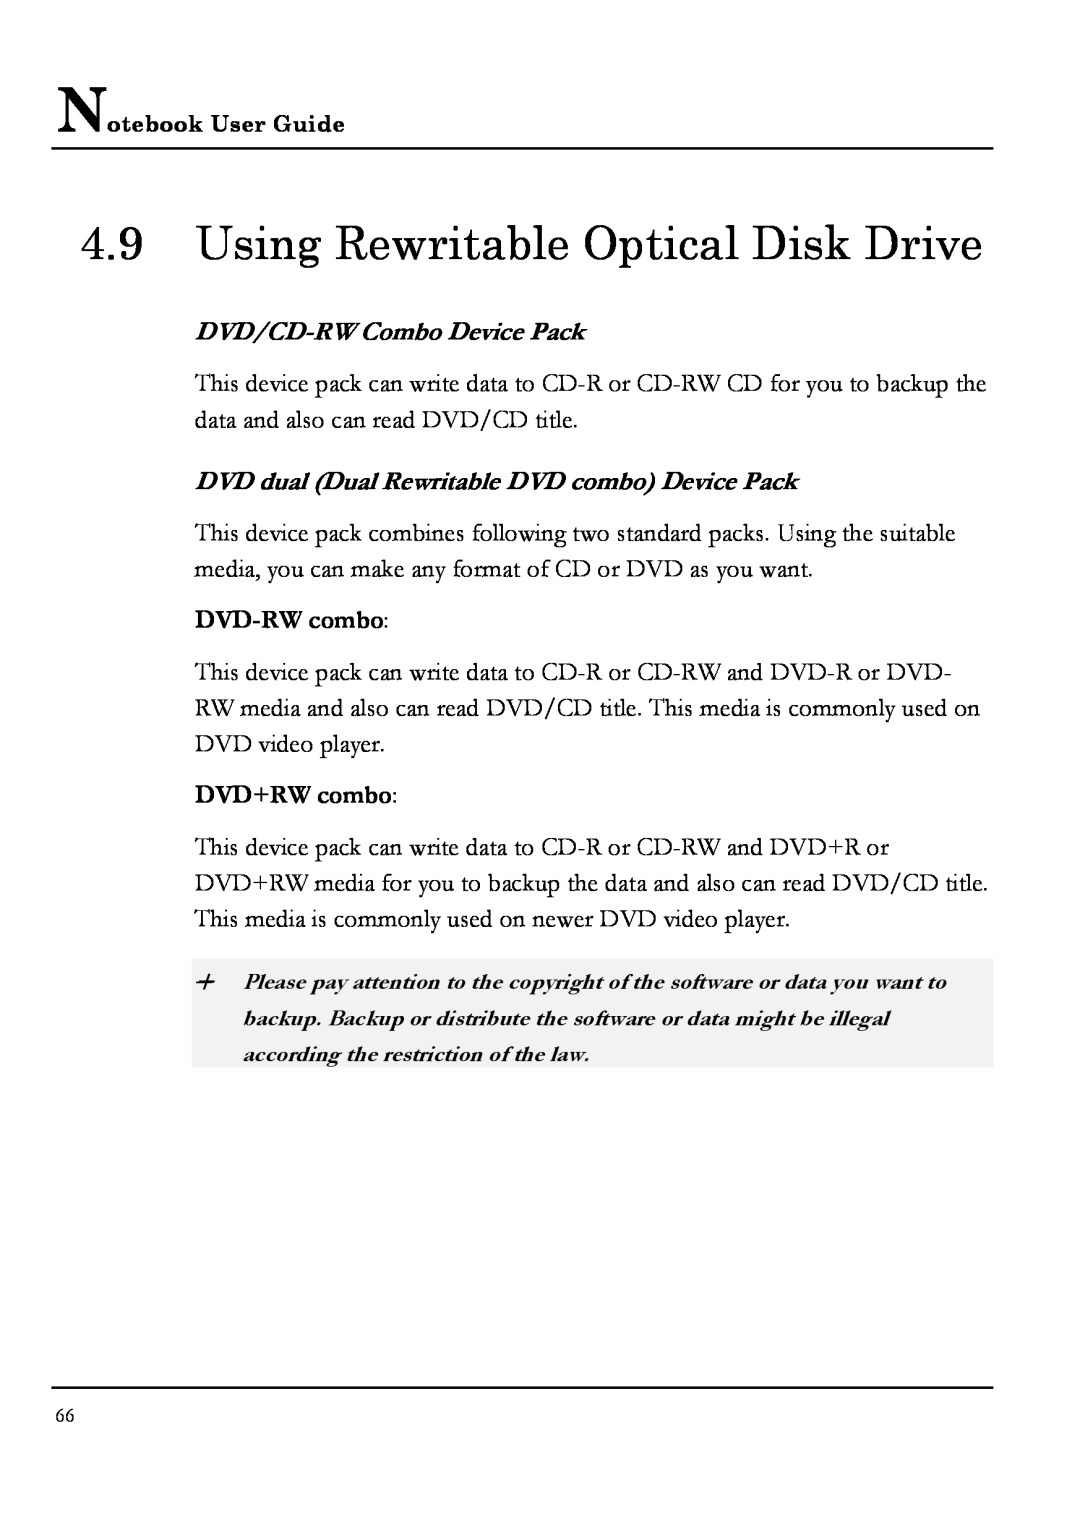 Everex NM3500W, NM4100W manual Using Rewritable Optical Disk Drive, DVD/CD-RW Combo Device Pack, DVD-RW combo, DVD+RW combo 